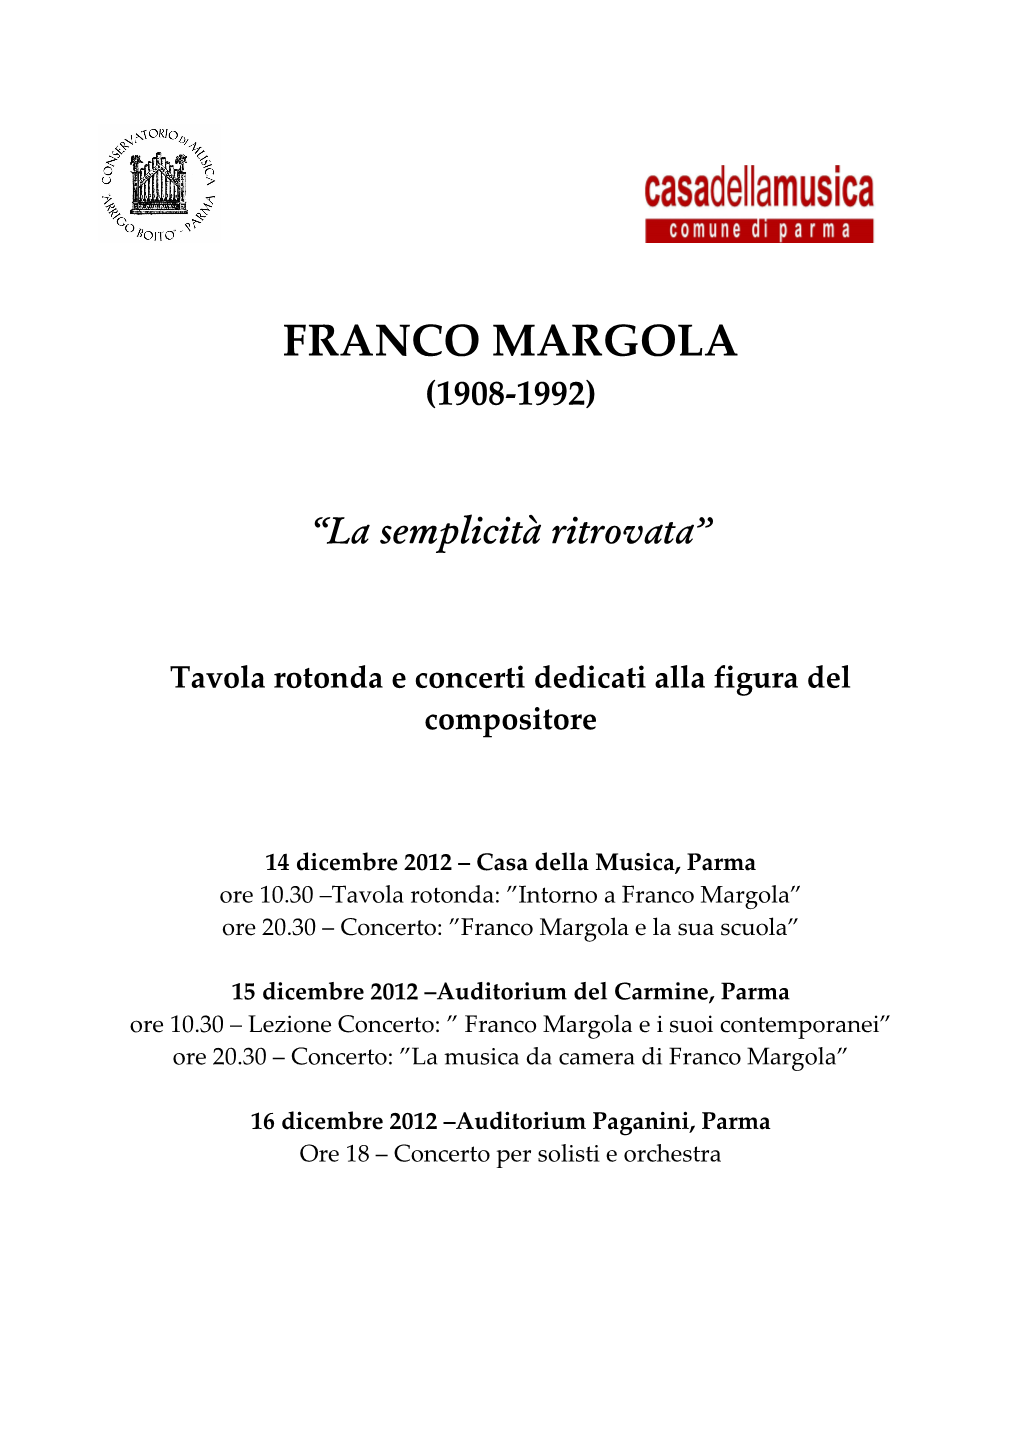 Franco Margola (1908-1992)